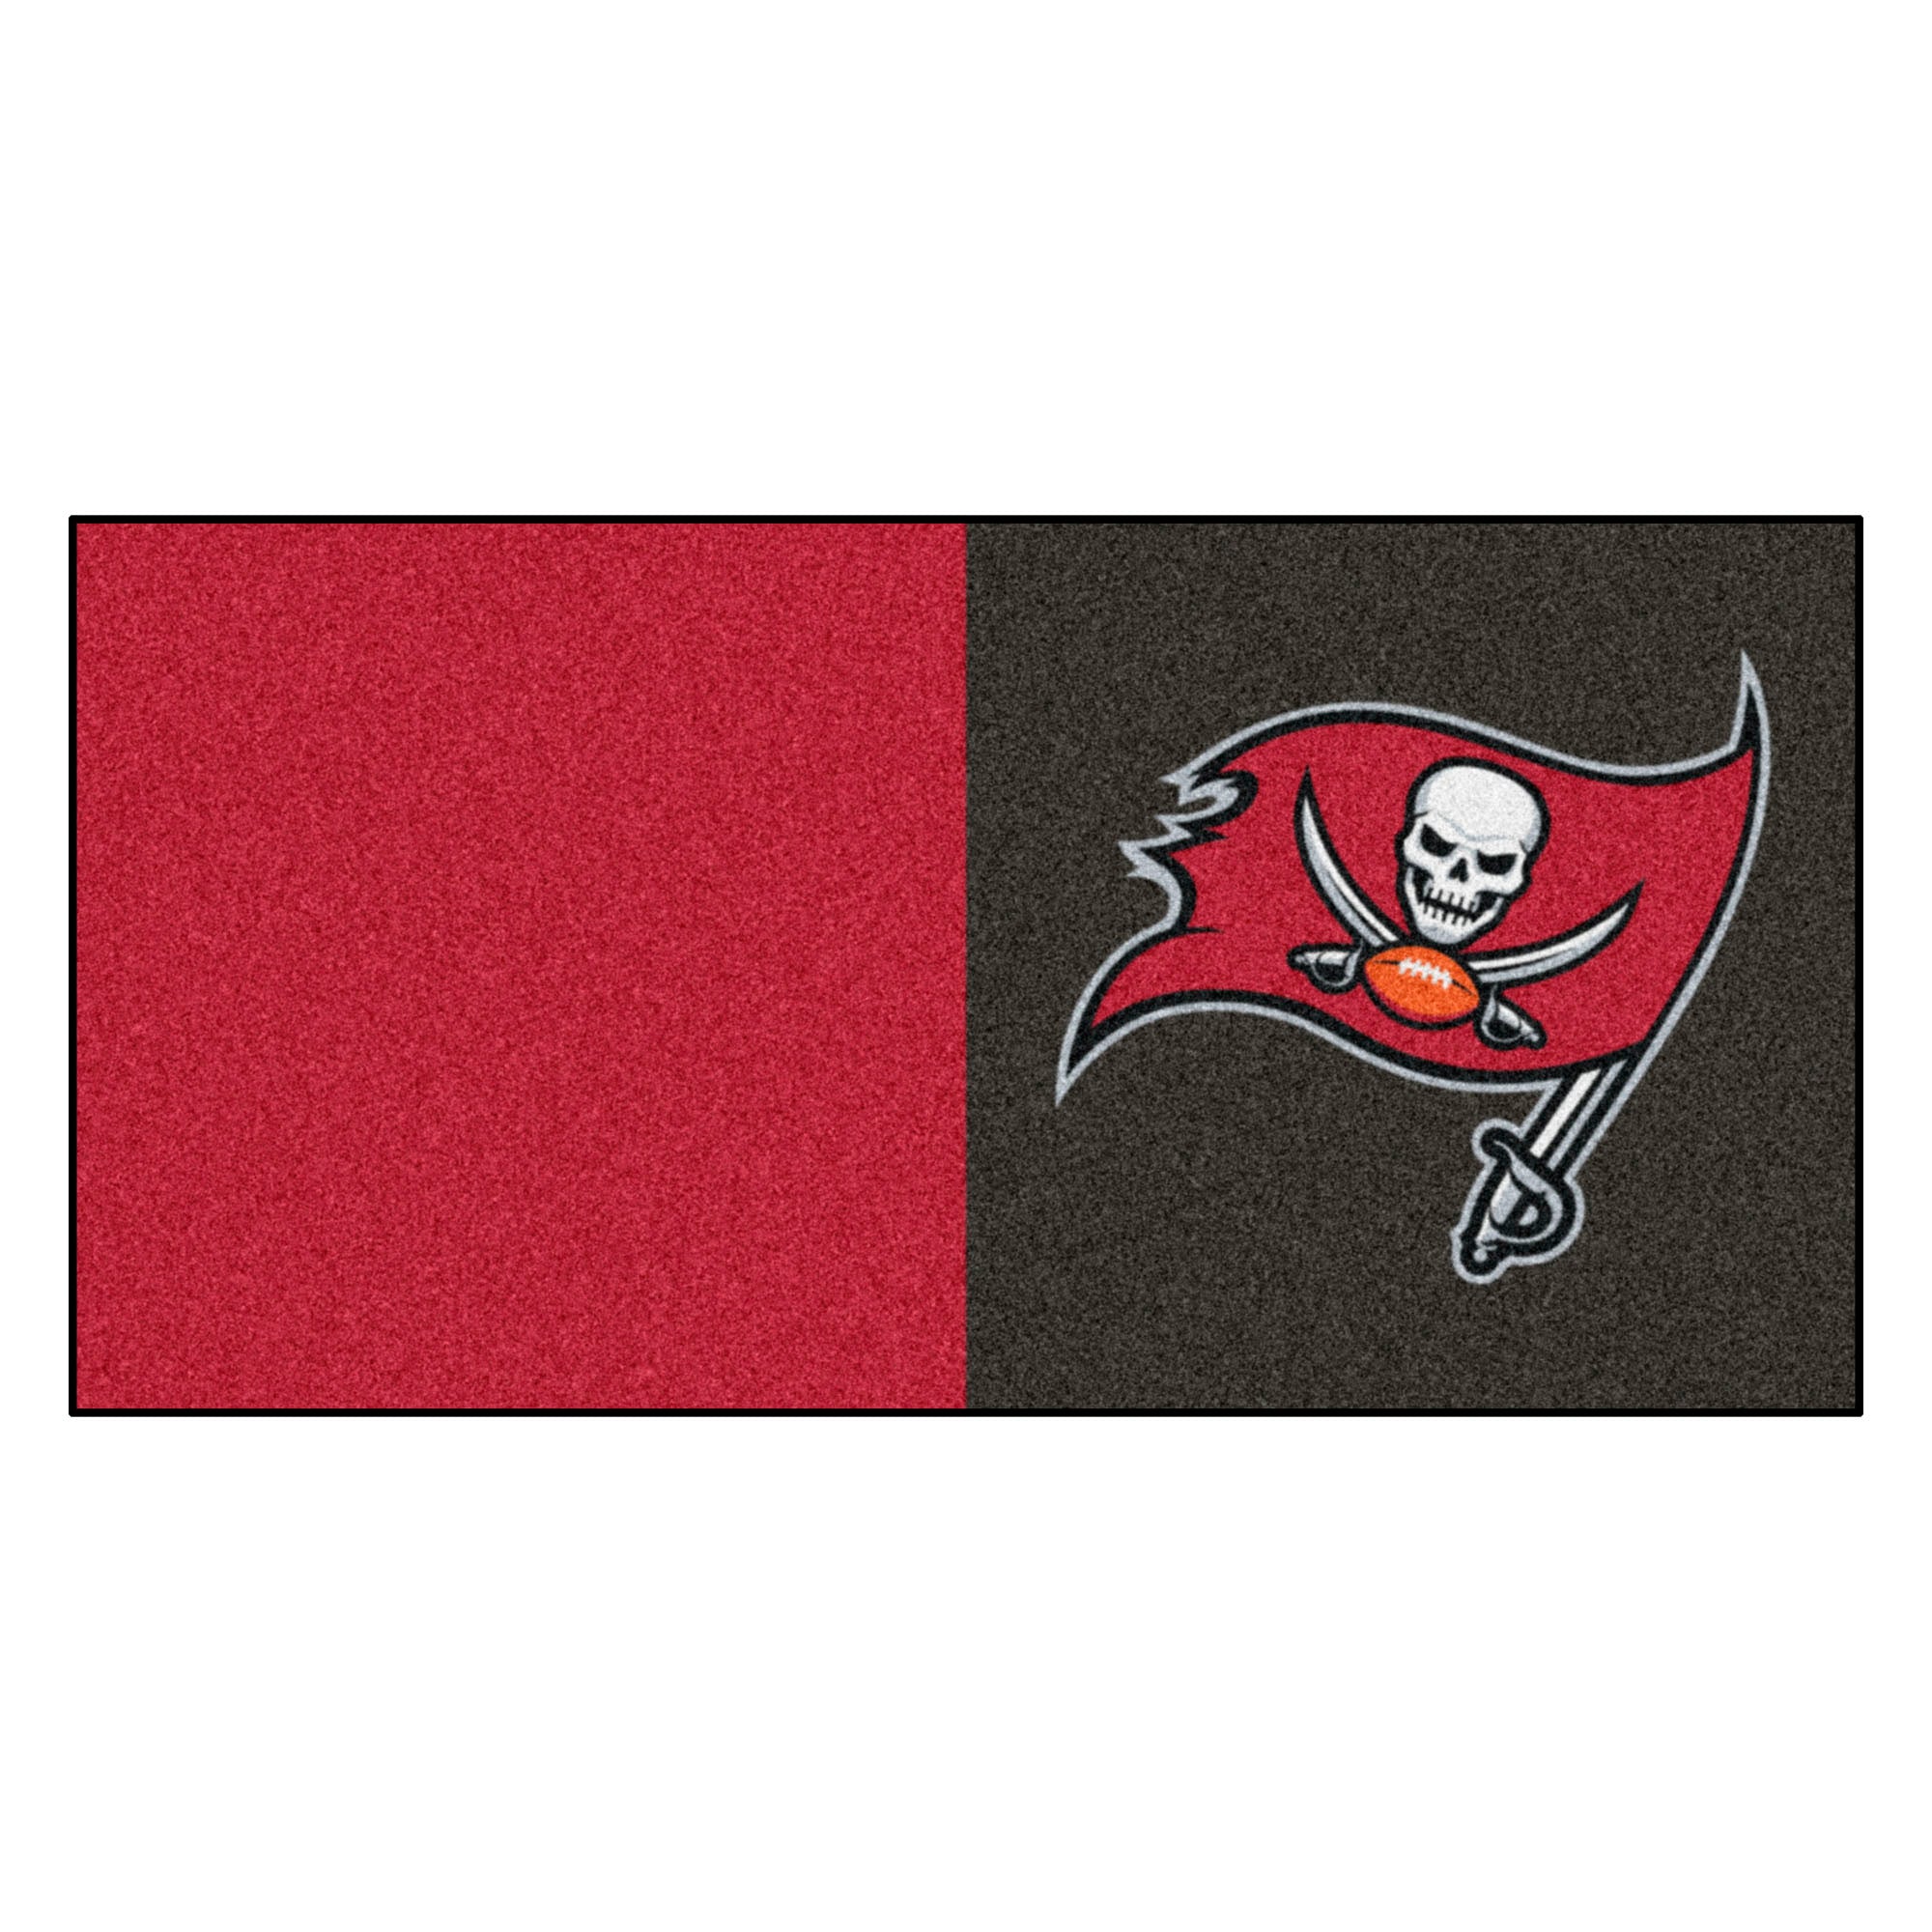 NFL - Tampa Bay Buccaneers Team Carpet Tiles